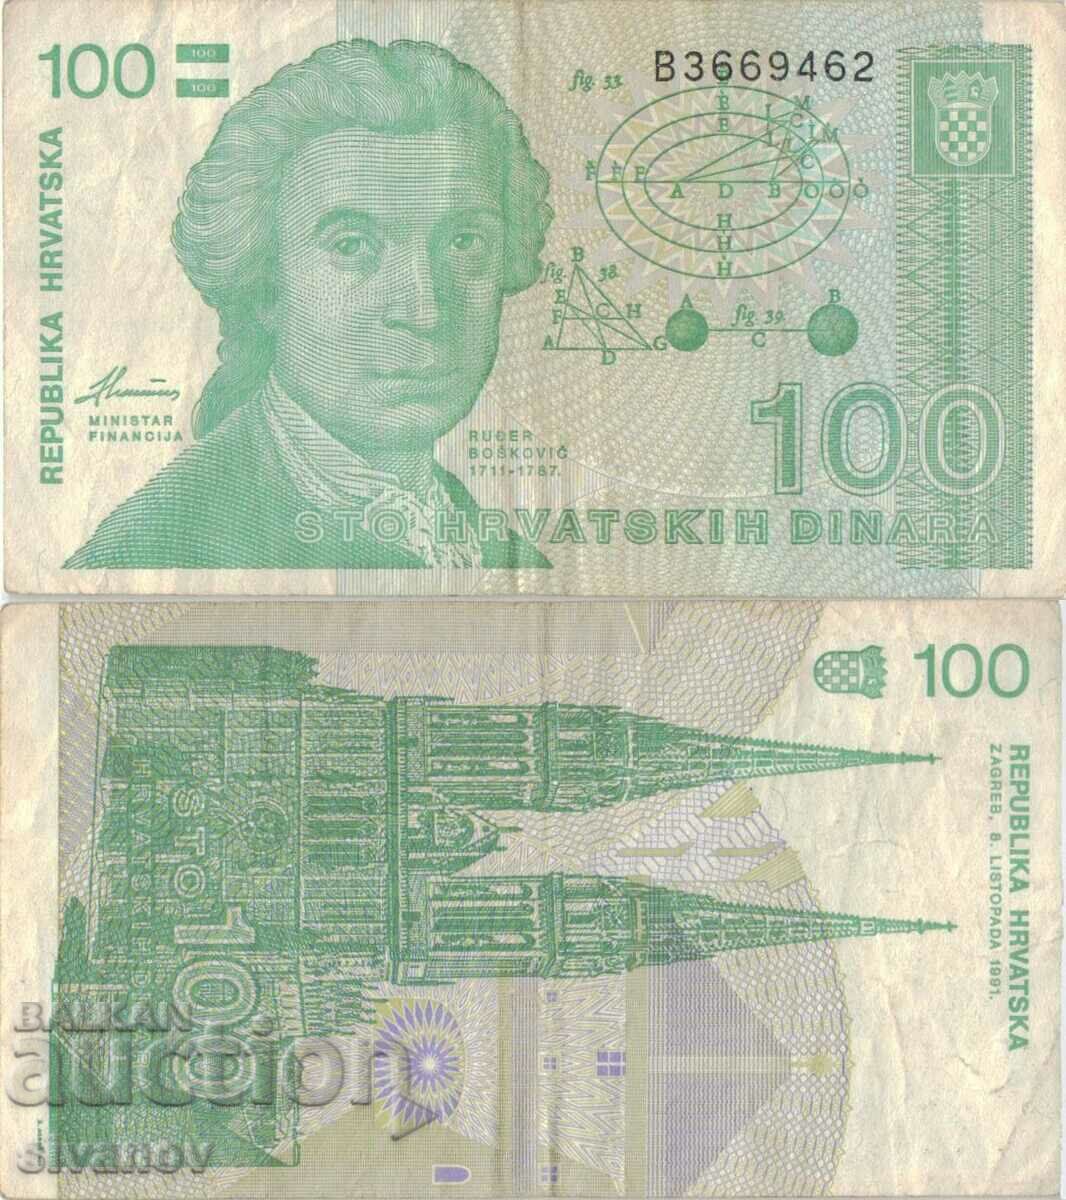 Croatia 100 dinars 1991 banknote #5326